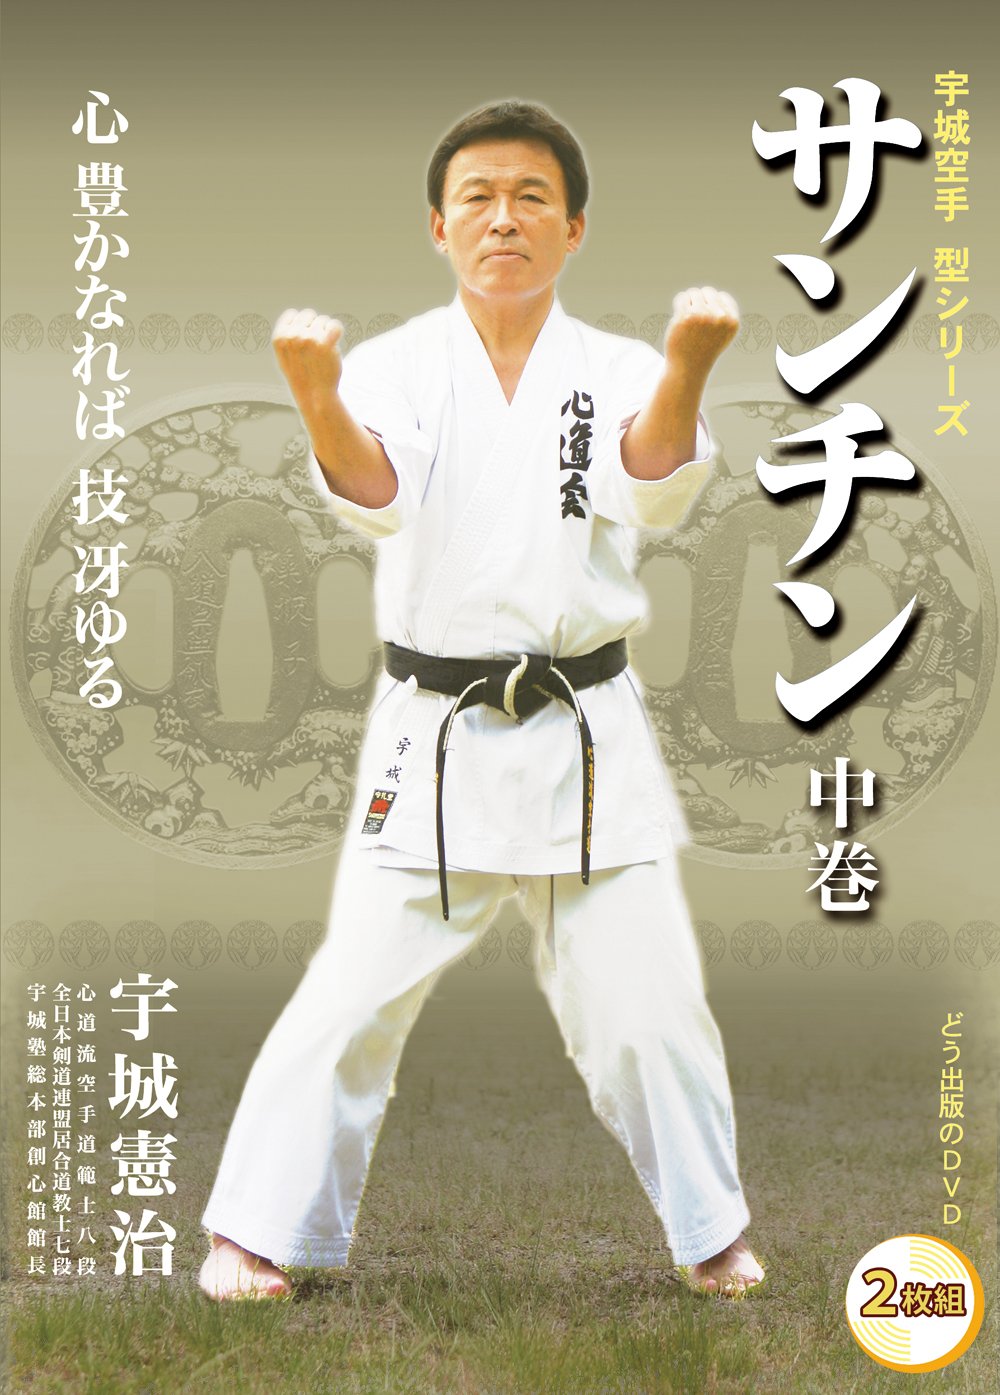 Ushiro Karate: Sanchin DVD 2 by Kenji Ushiro - Budovideos